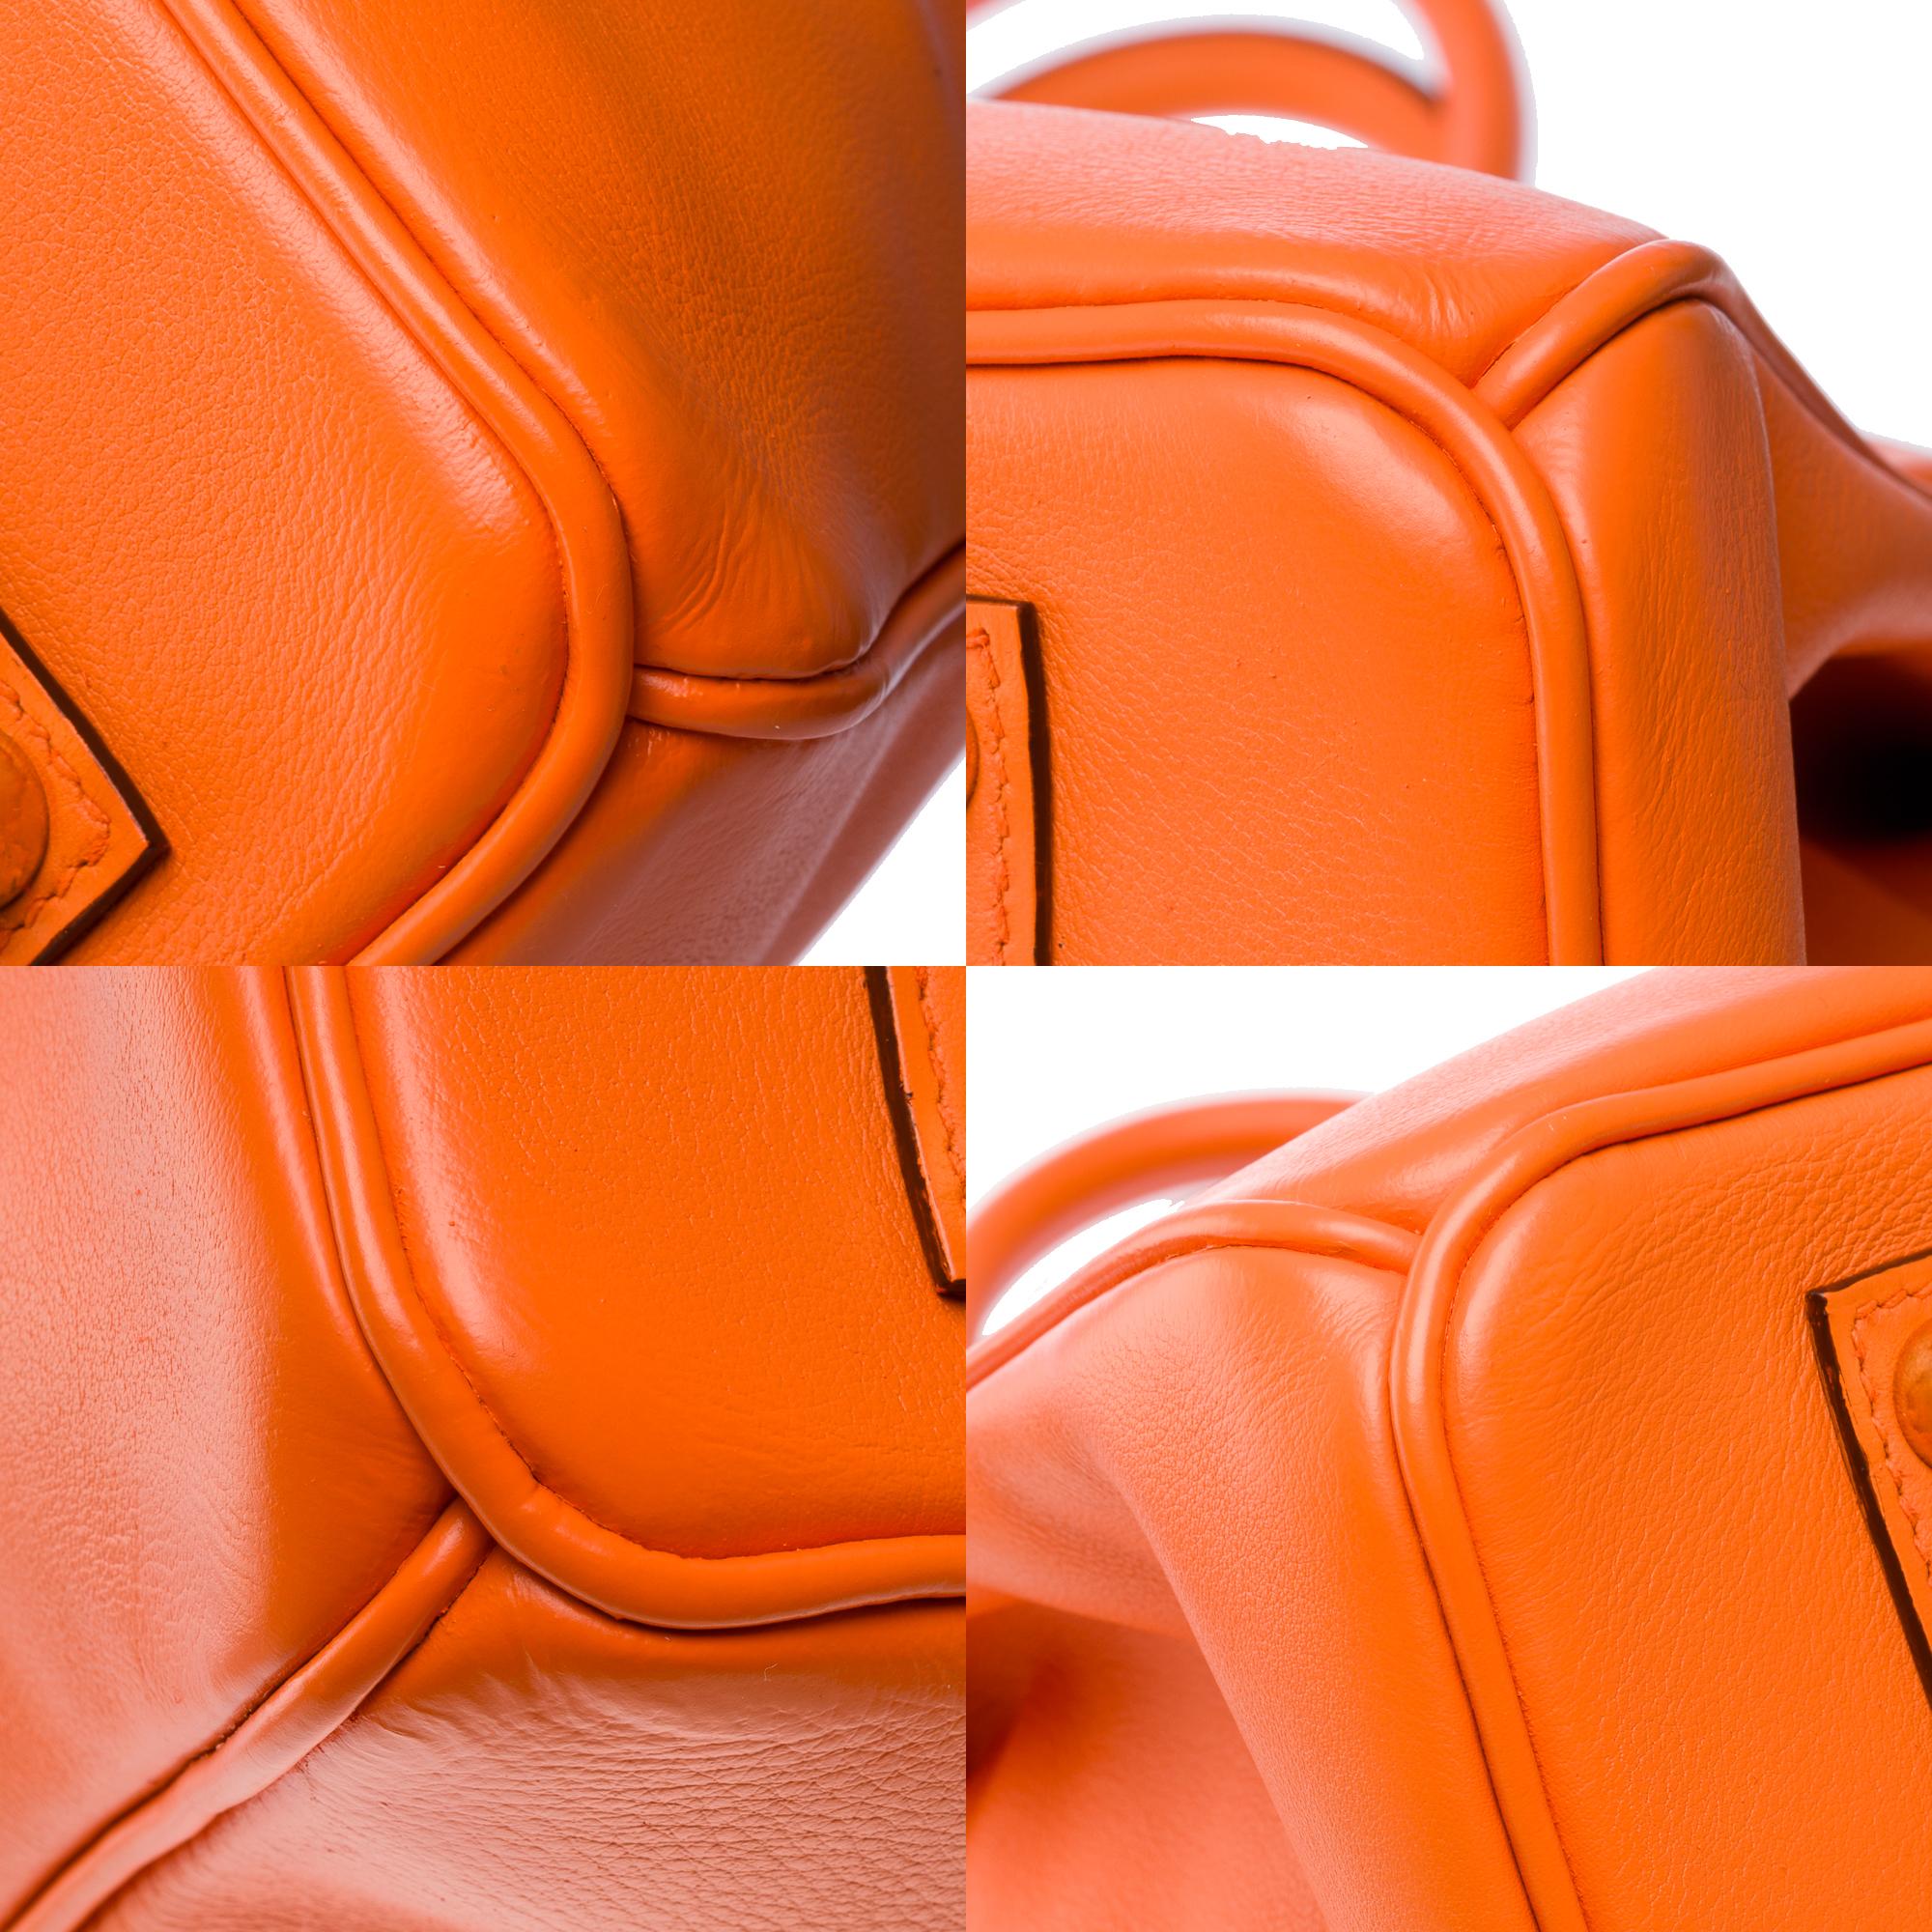 Amazing Hermès Birkin 35 handbag in Orange Swift Calf leather, GHW 8